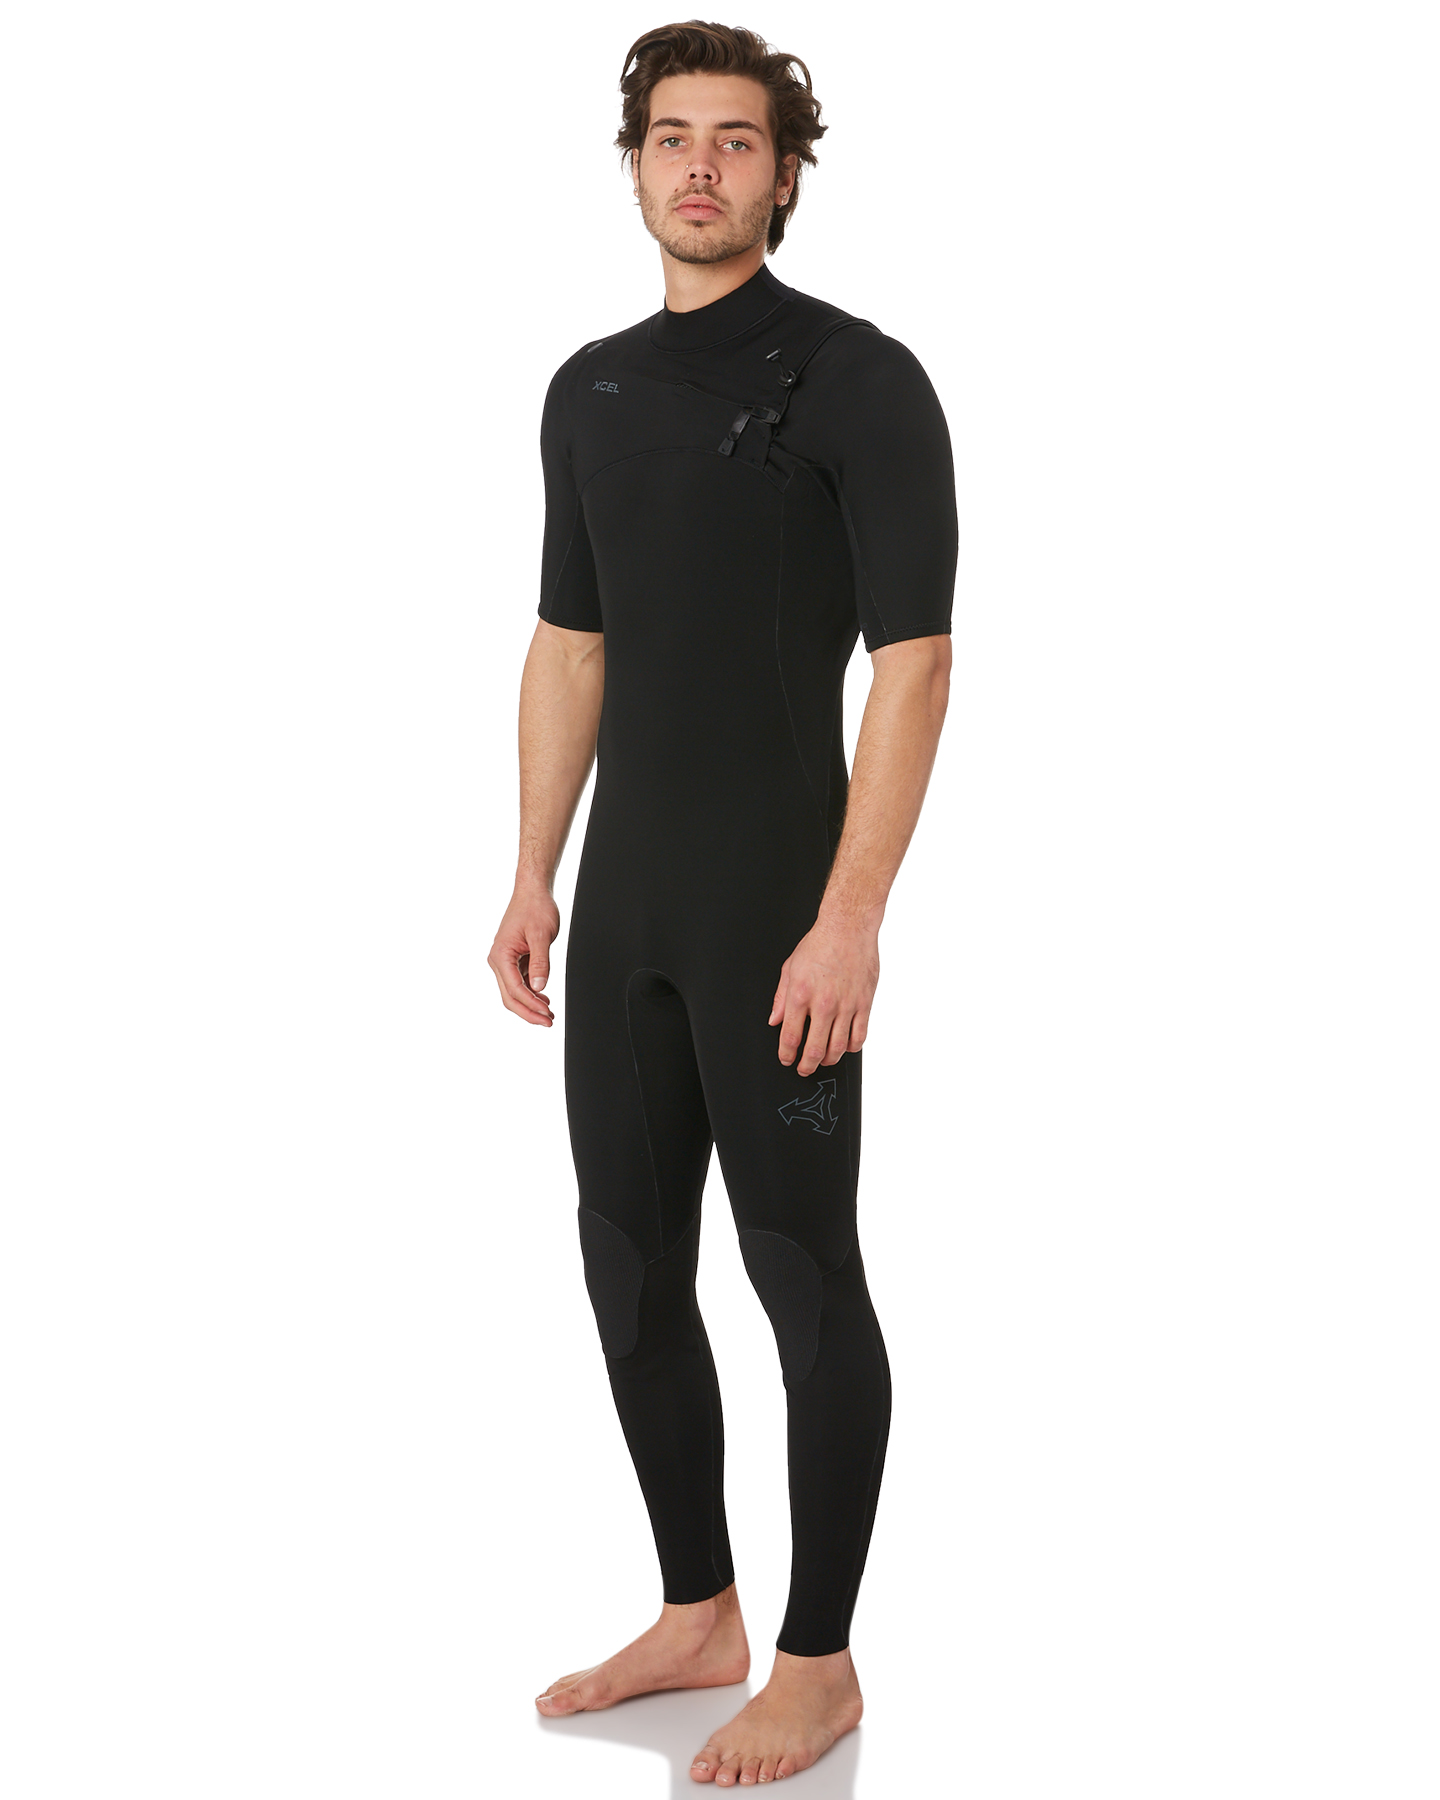 Xcel Men's Comp X Short Sleeve 2Mm Fullsuit 2Mm - Black | SurfStitch